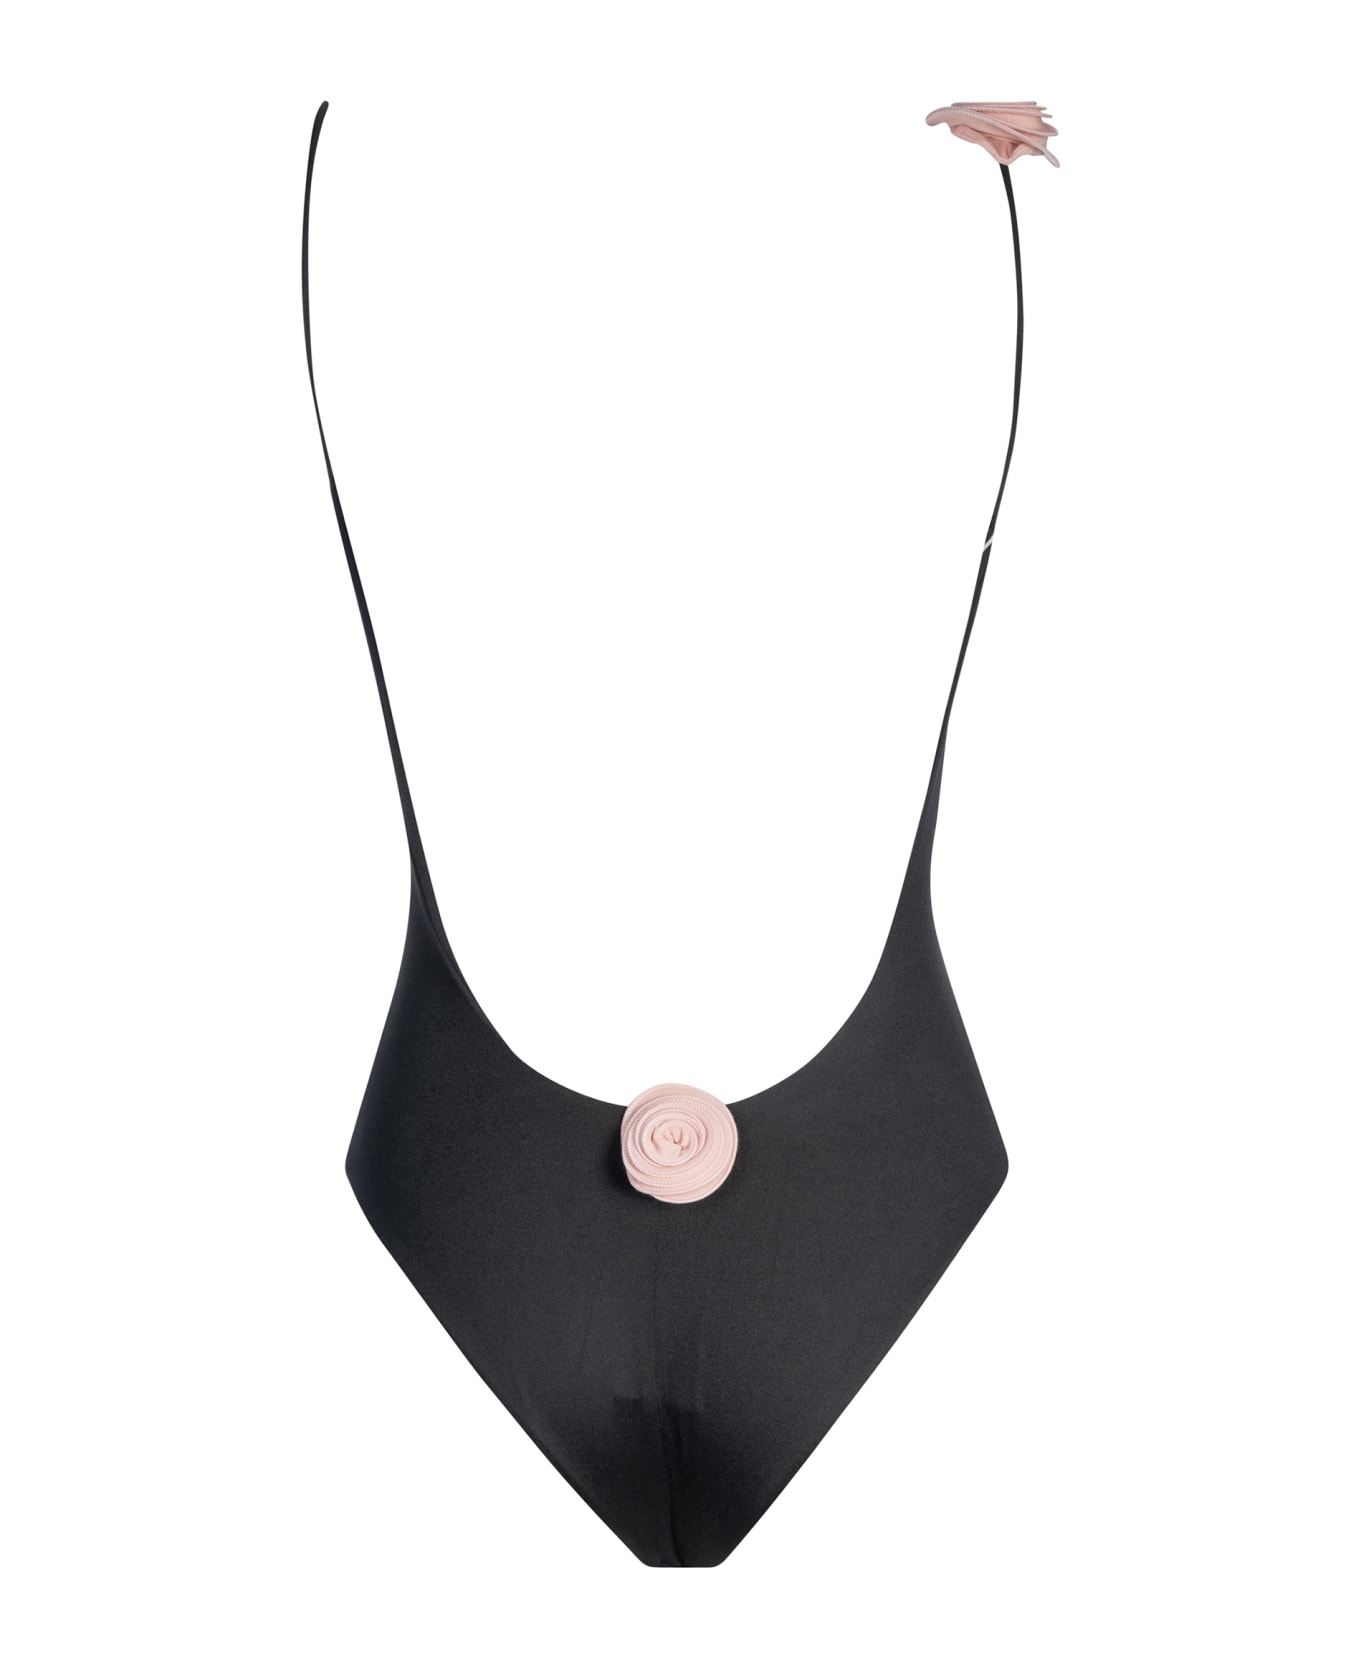 La Reveche Ashar One-piece Bikini - Black/Pink